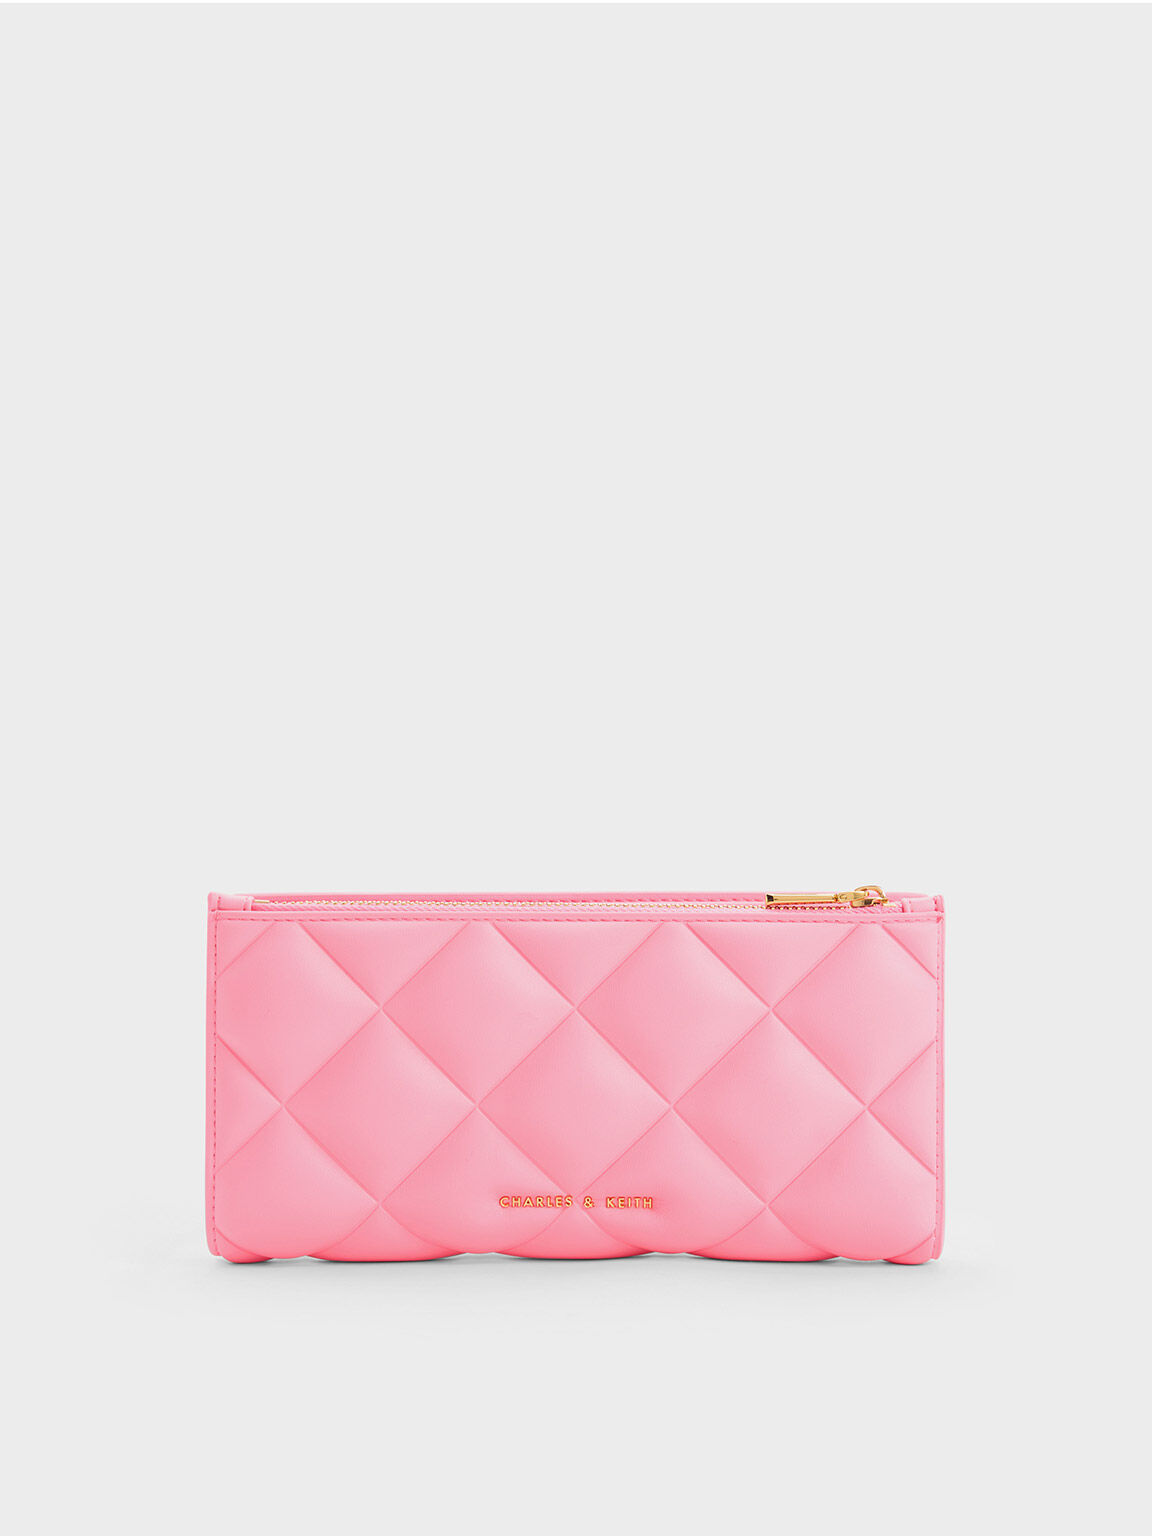 Danika Quilted Long Wallet, Pink, hi-res